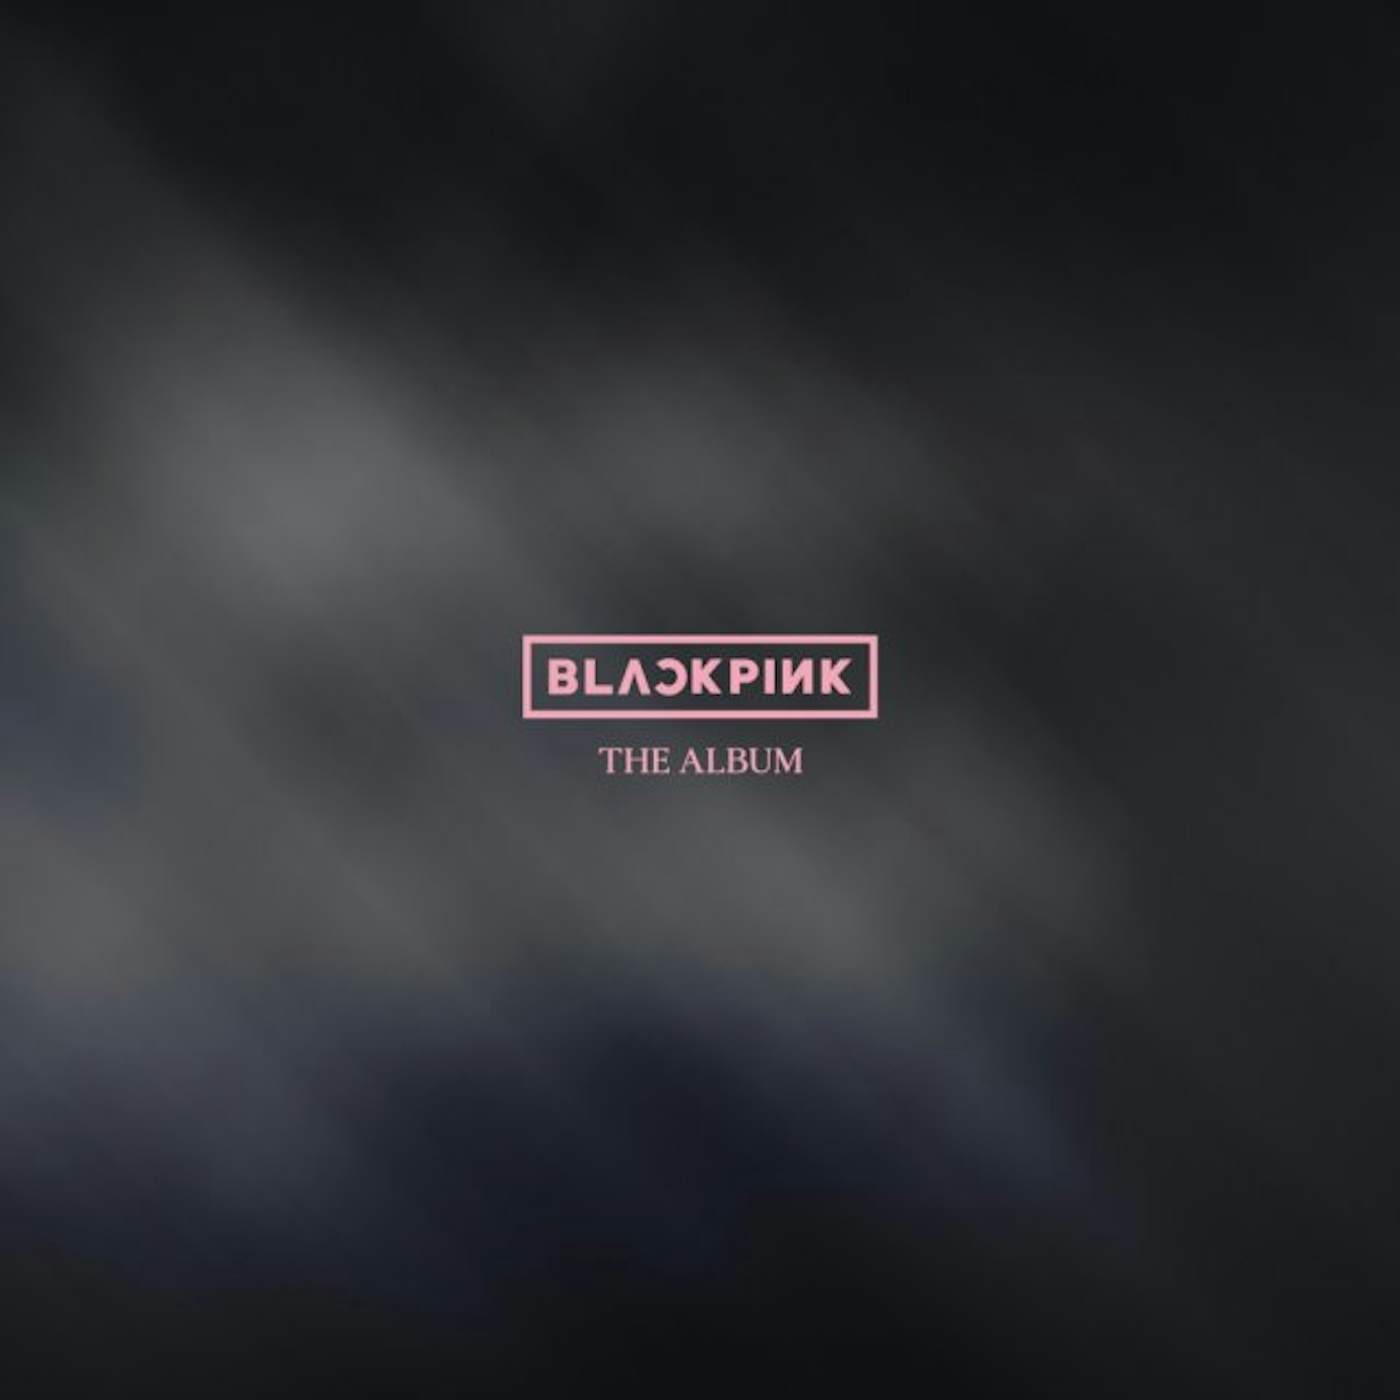 BLACKPINK ALBUM (JAPAN VERSION) (LIMITED B VERSION) CD